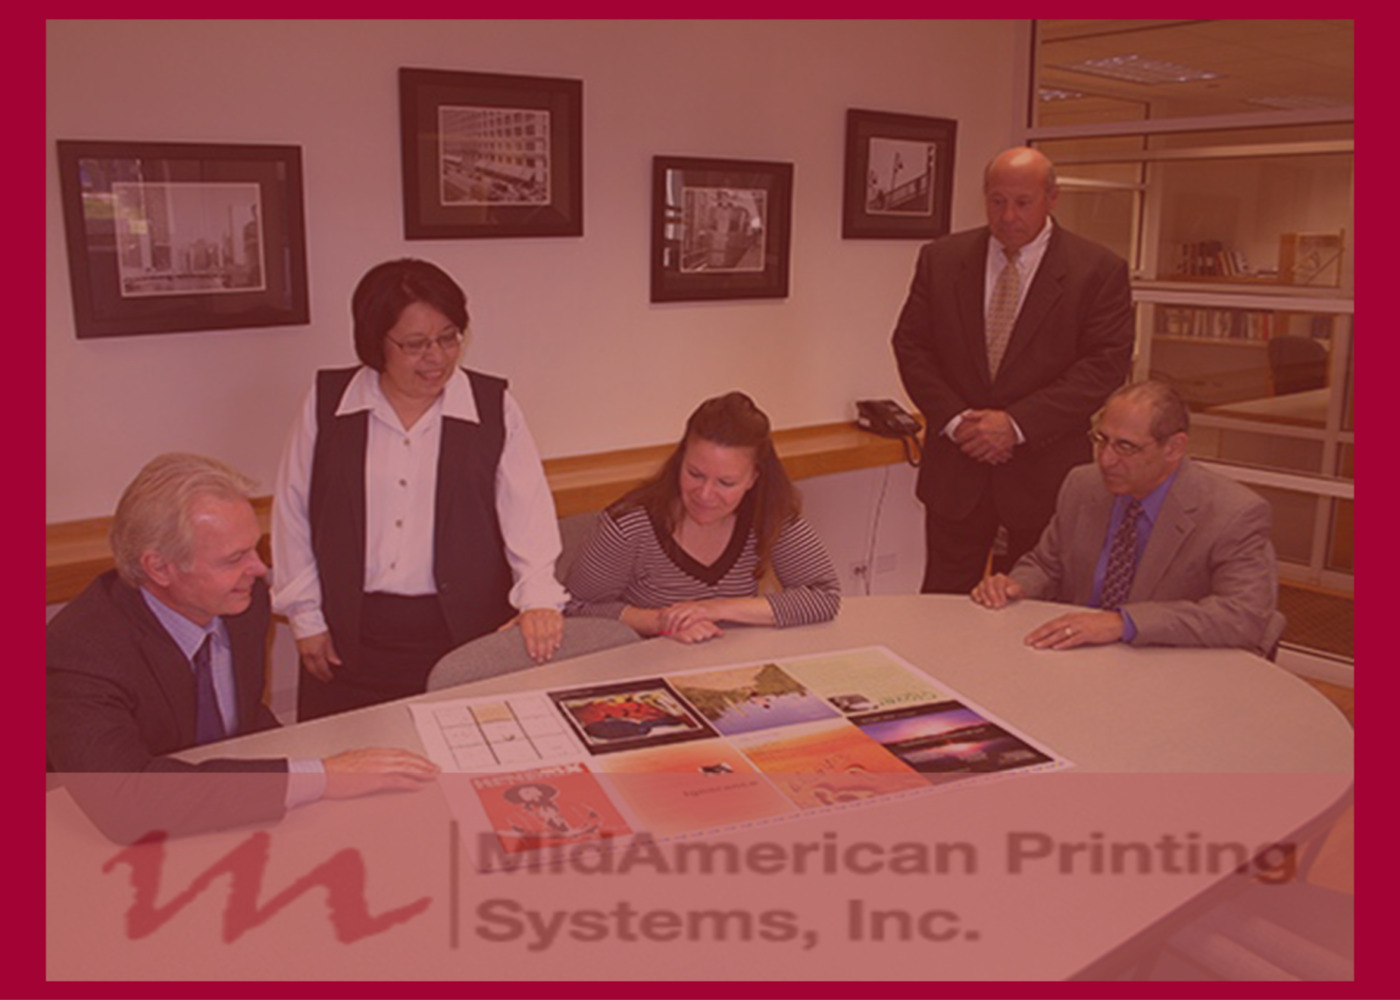 MidAmerican Printing Systems - Chicago Printing Company